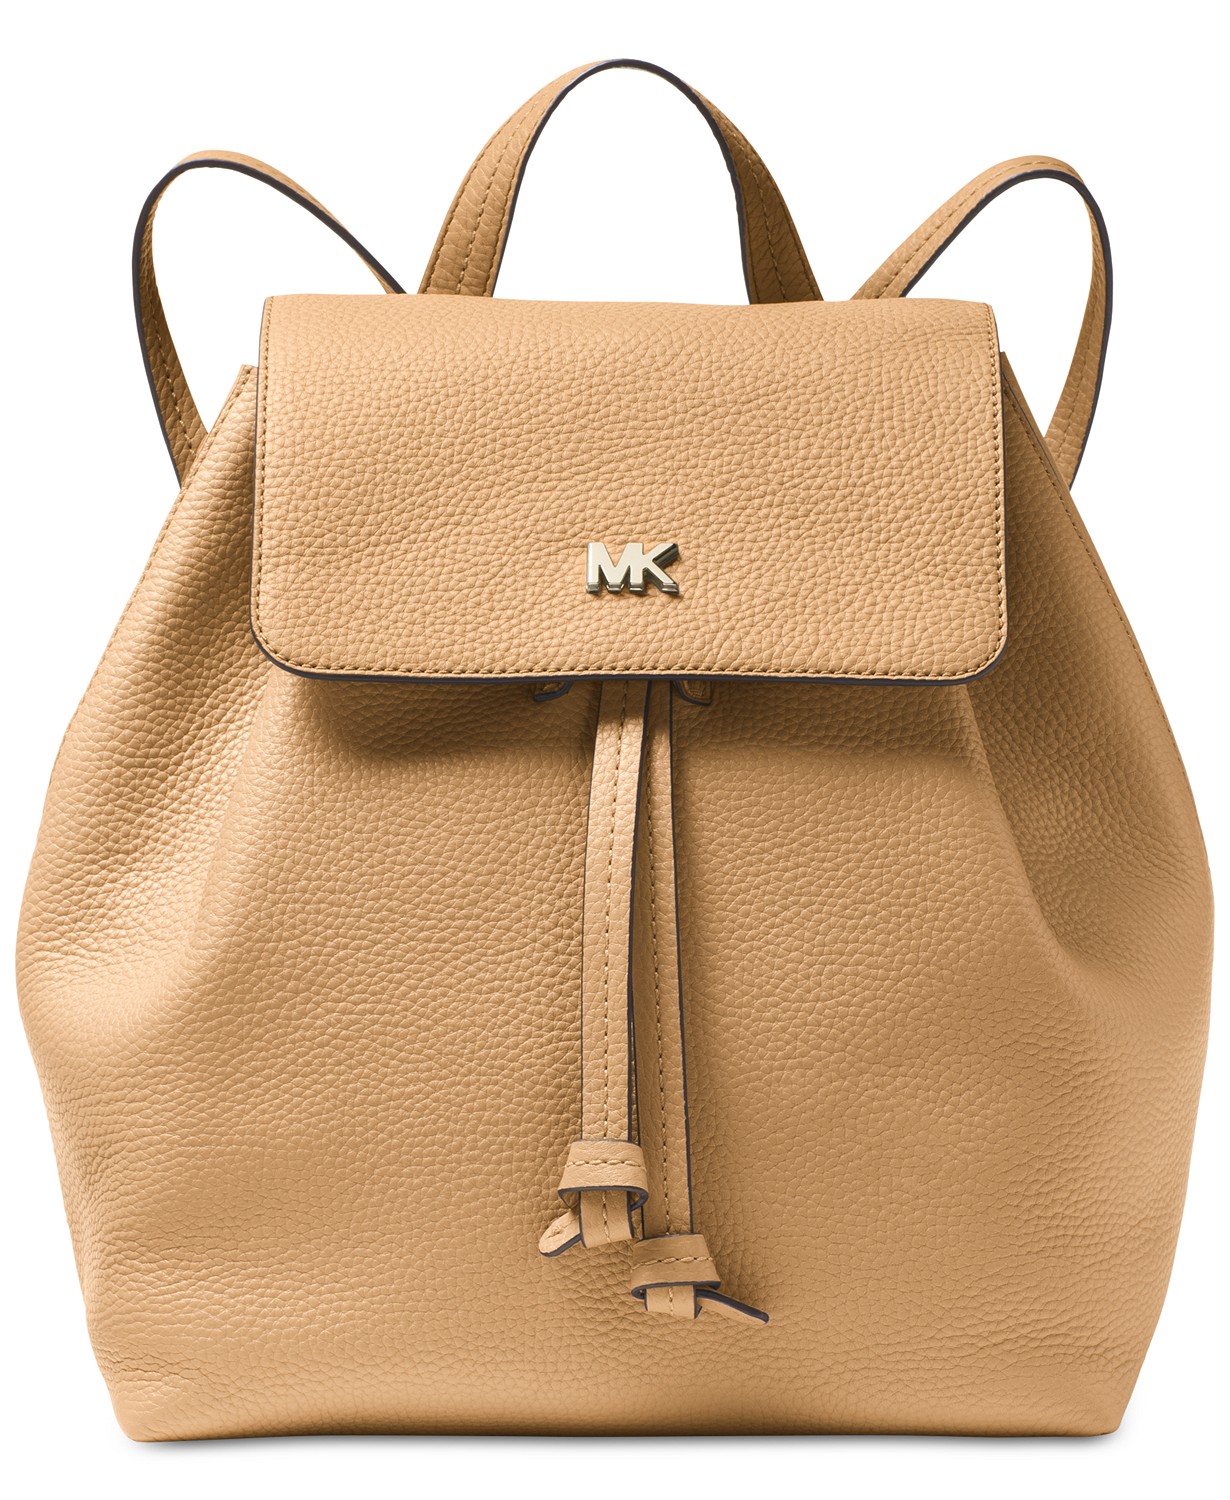 Macy's Style Crew | Michael kors Handbag & luggage